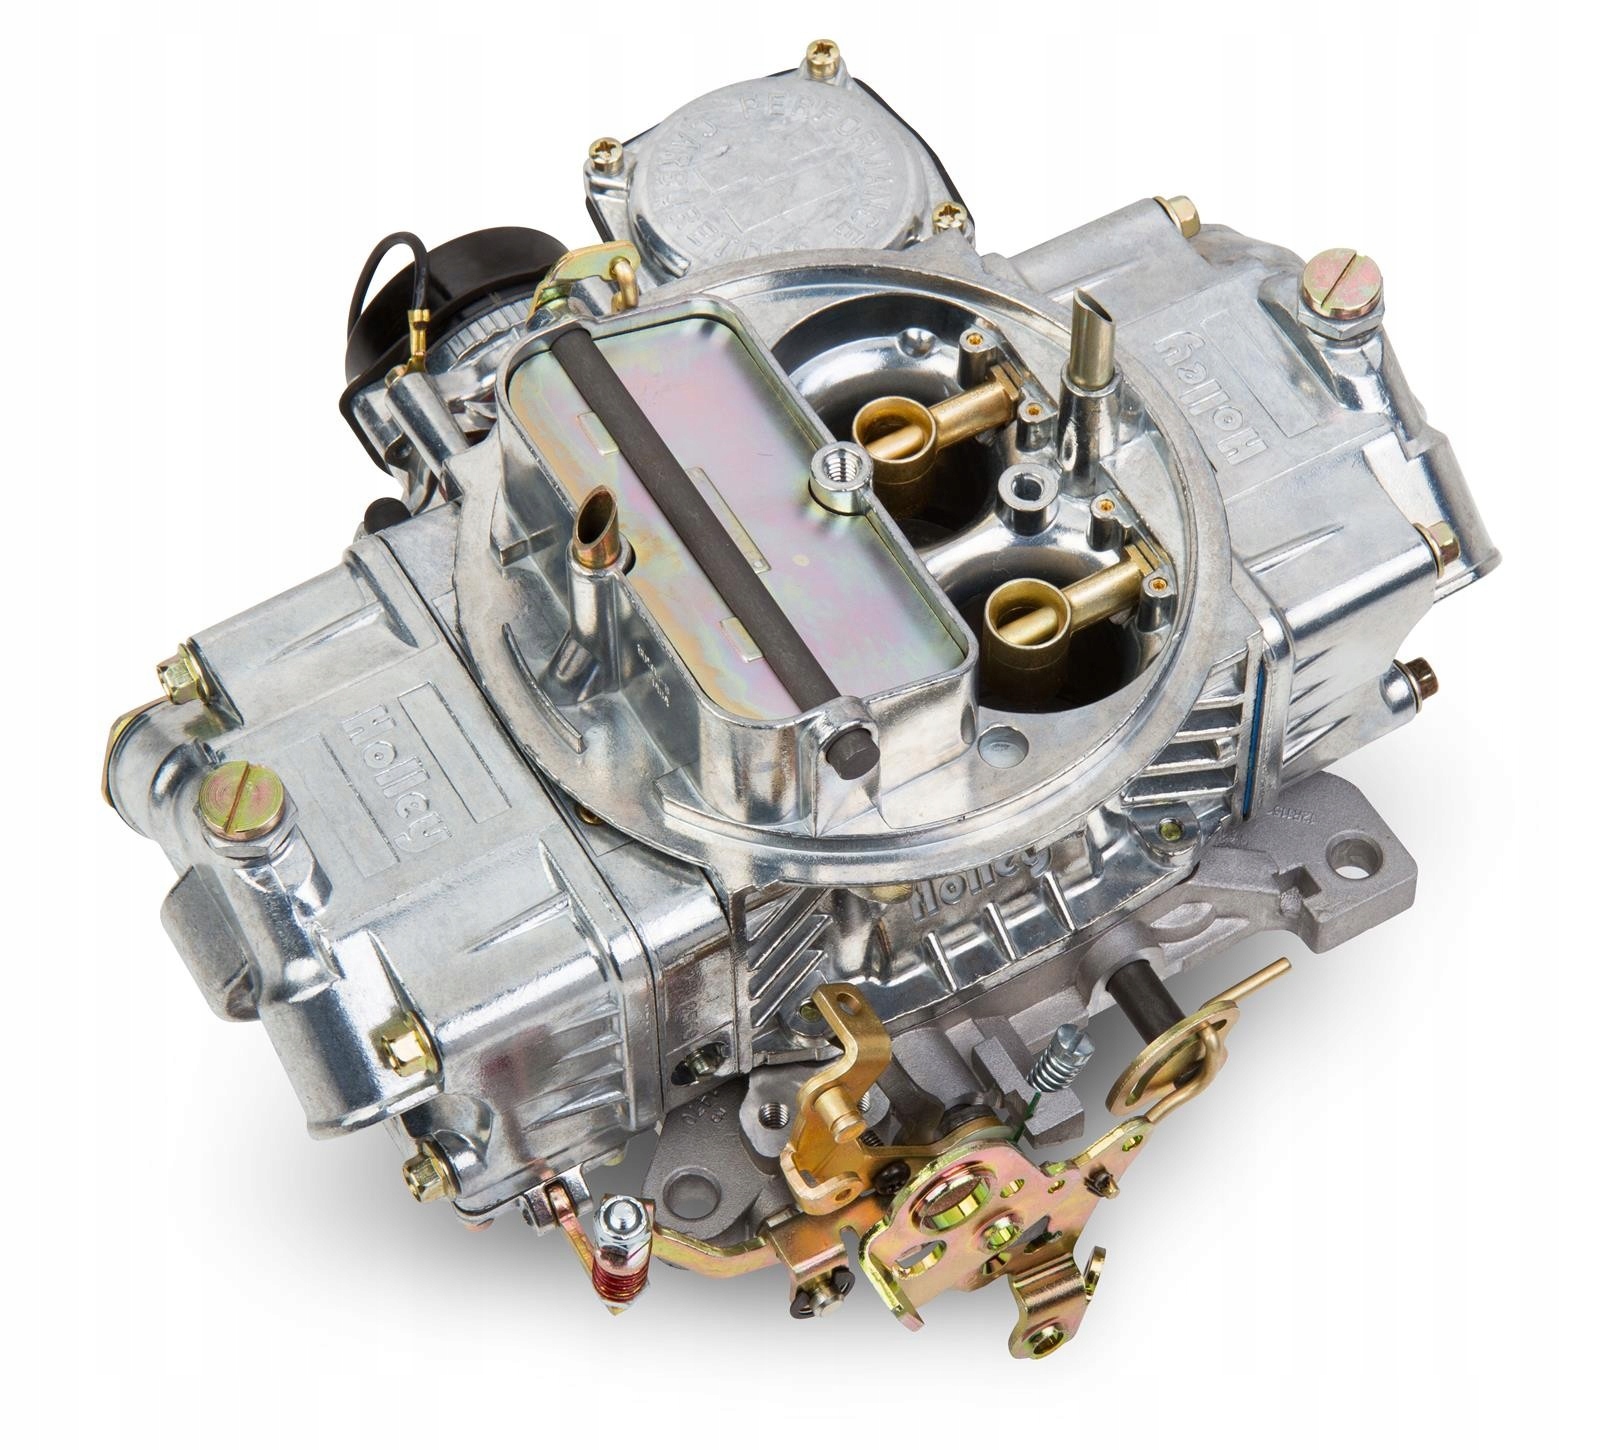 Karburátor Holley 4160 750 CFM 0-80508S